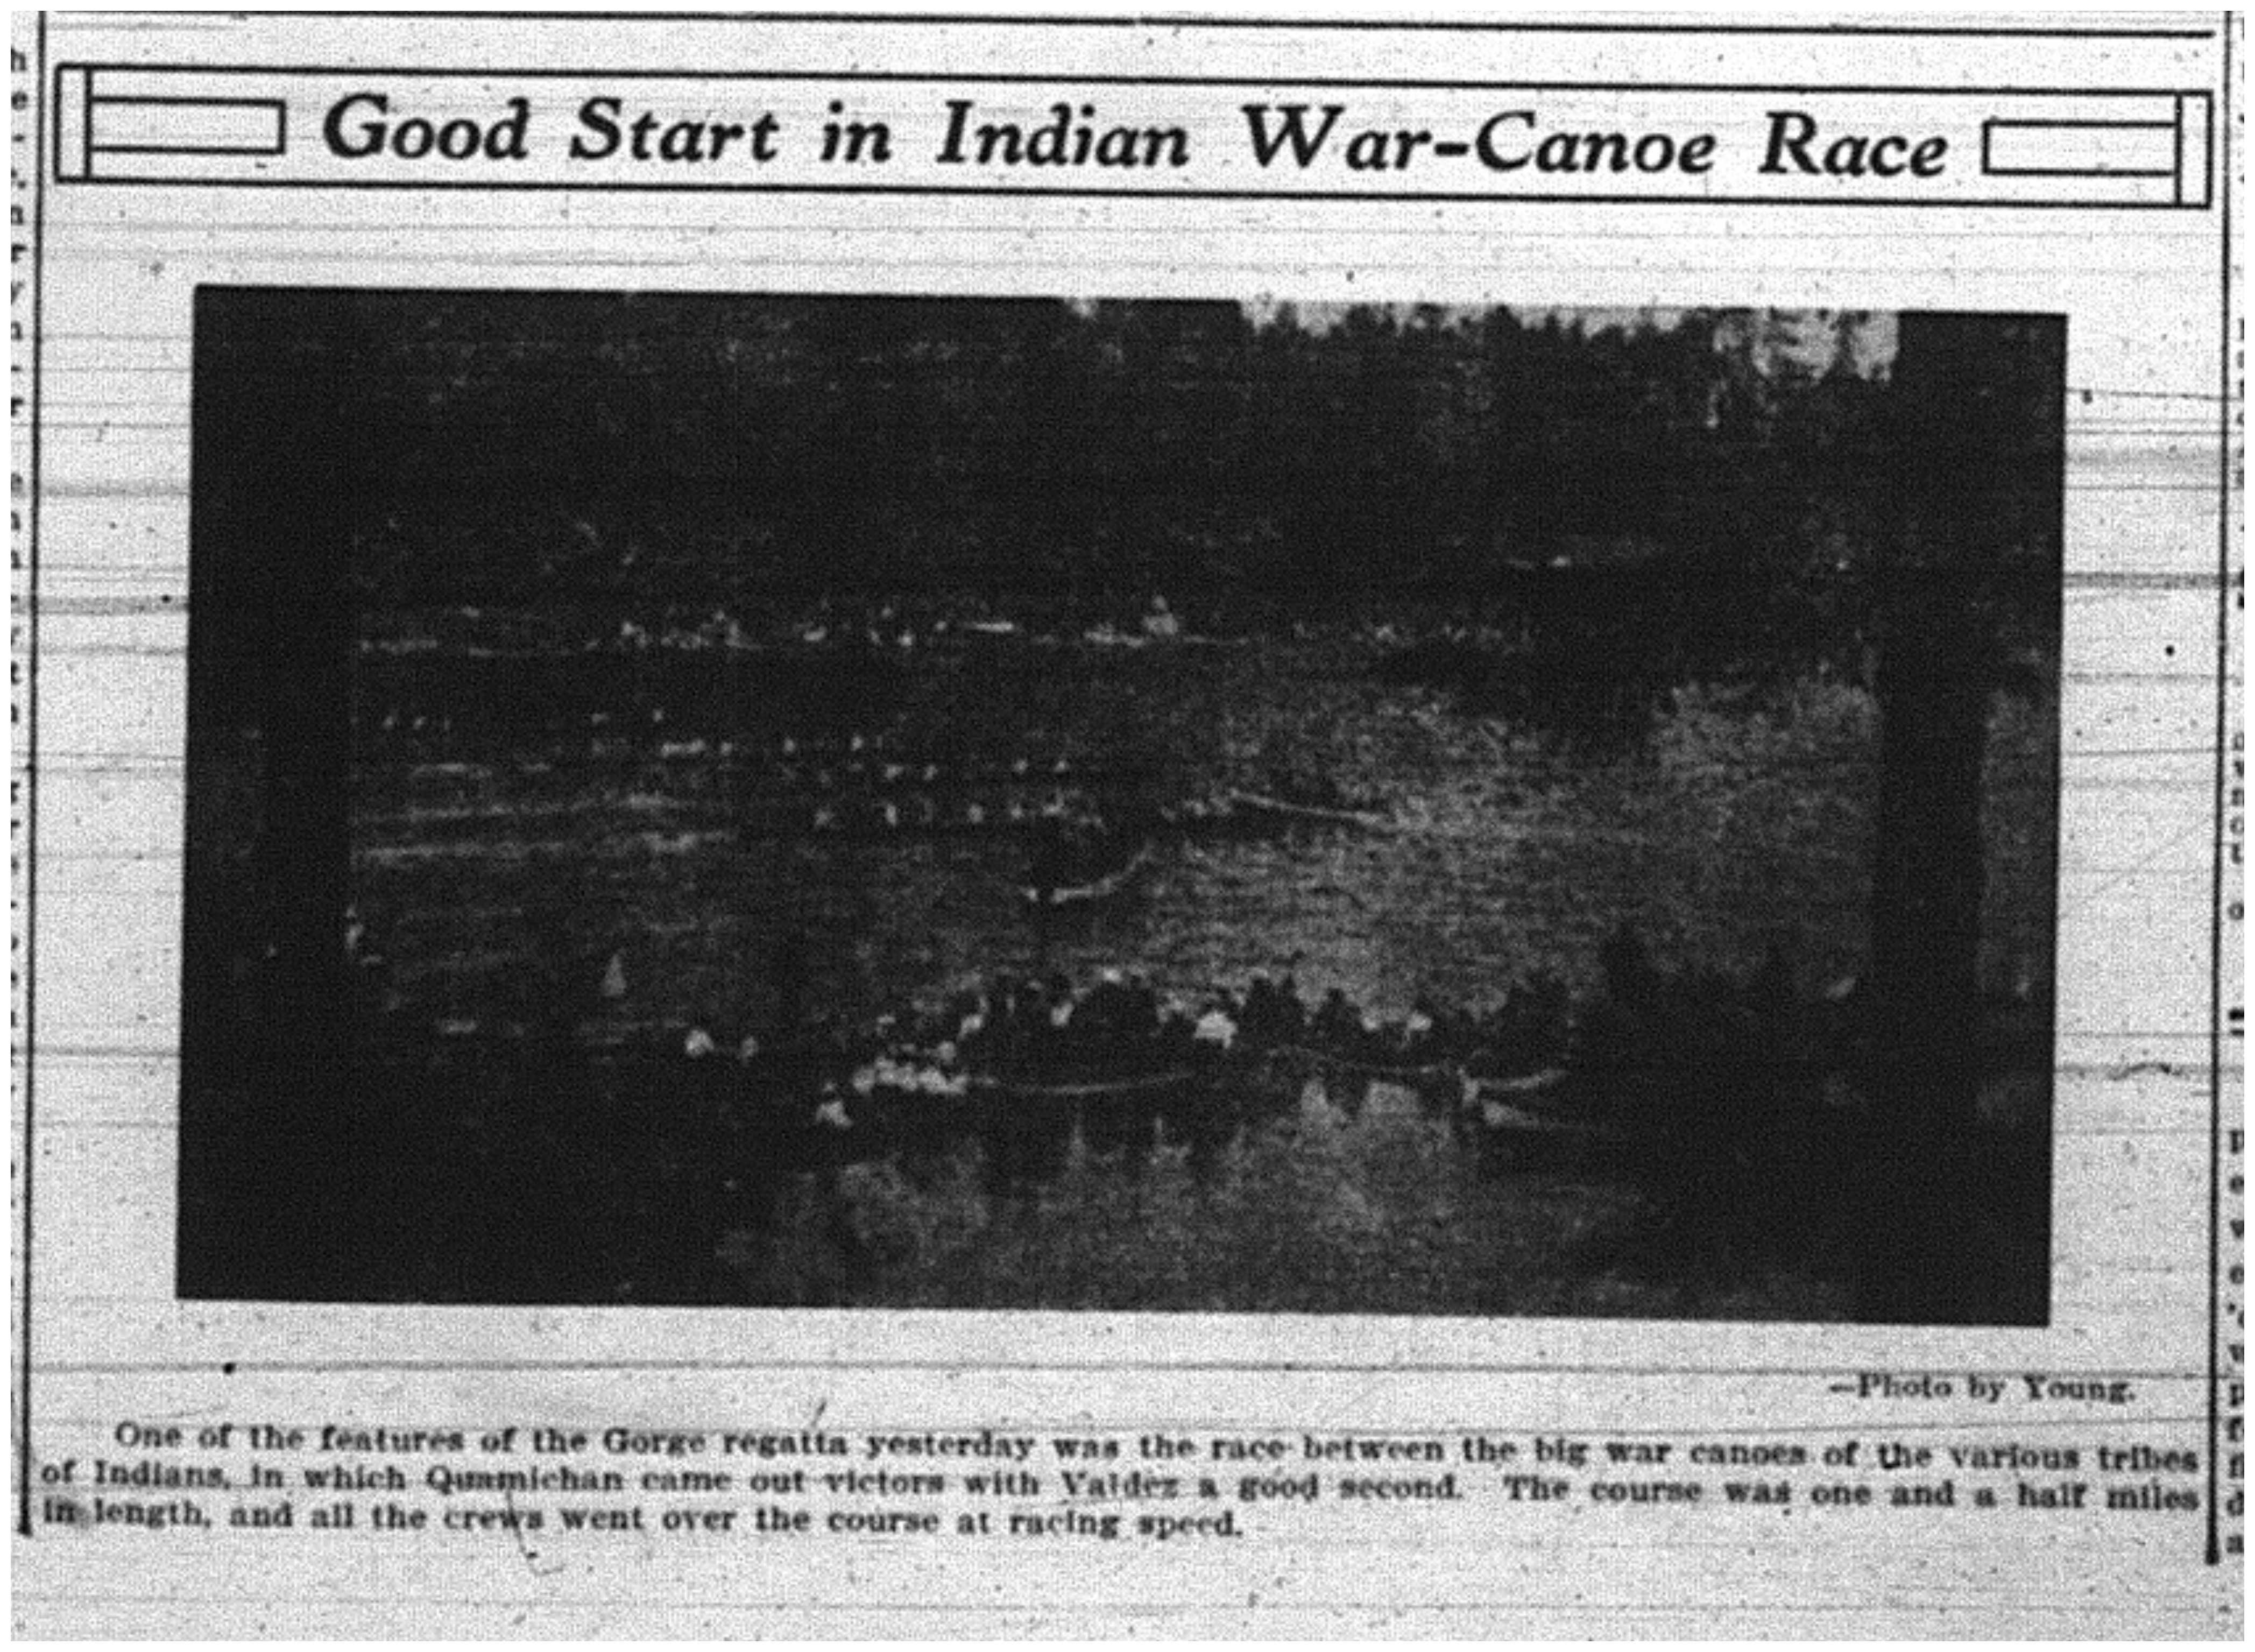 "Good Start in Indian War-Canoe Race"